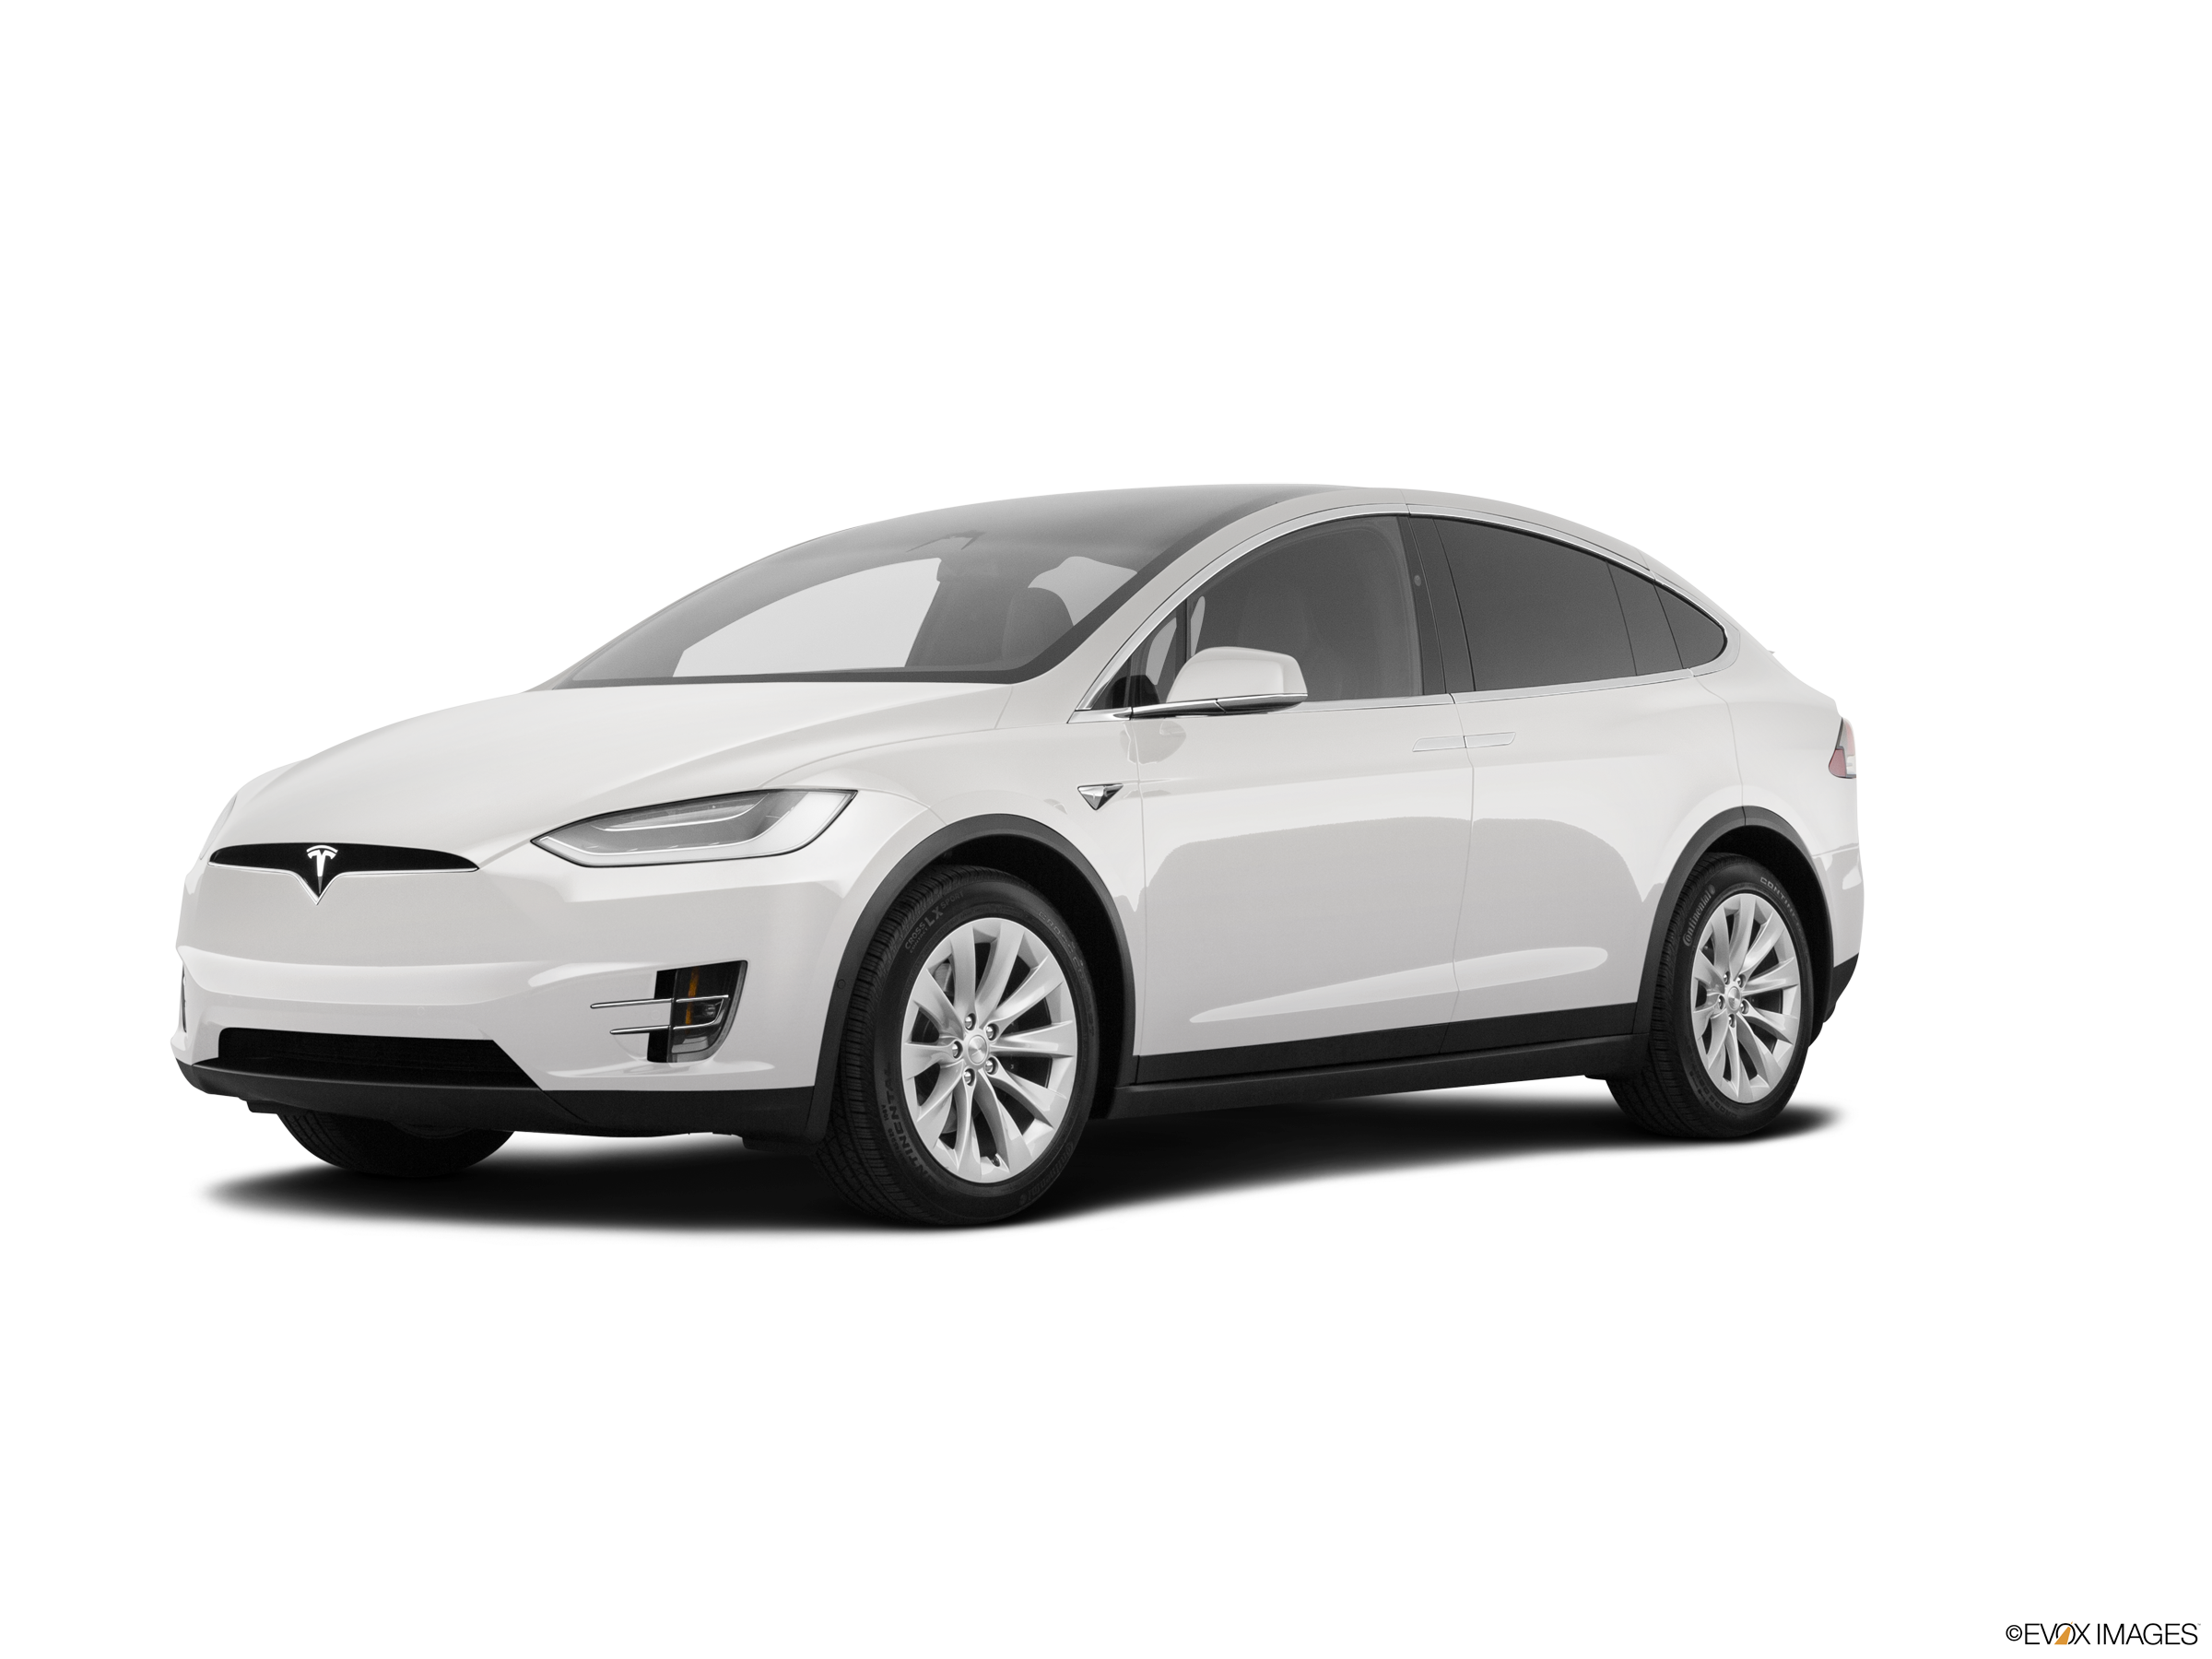 zoete smaak Mineraalwater Decoderen 2019 Tesla Model X Values & Cars for Sale | Kelley Blue Book